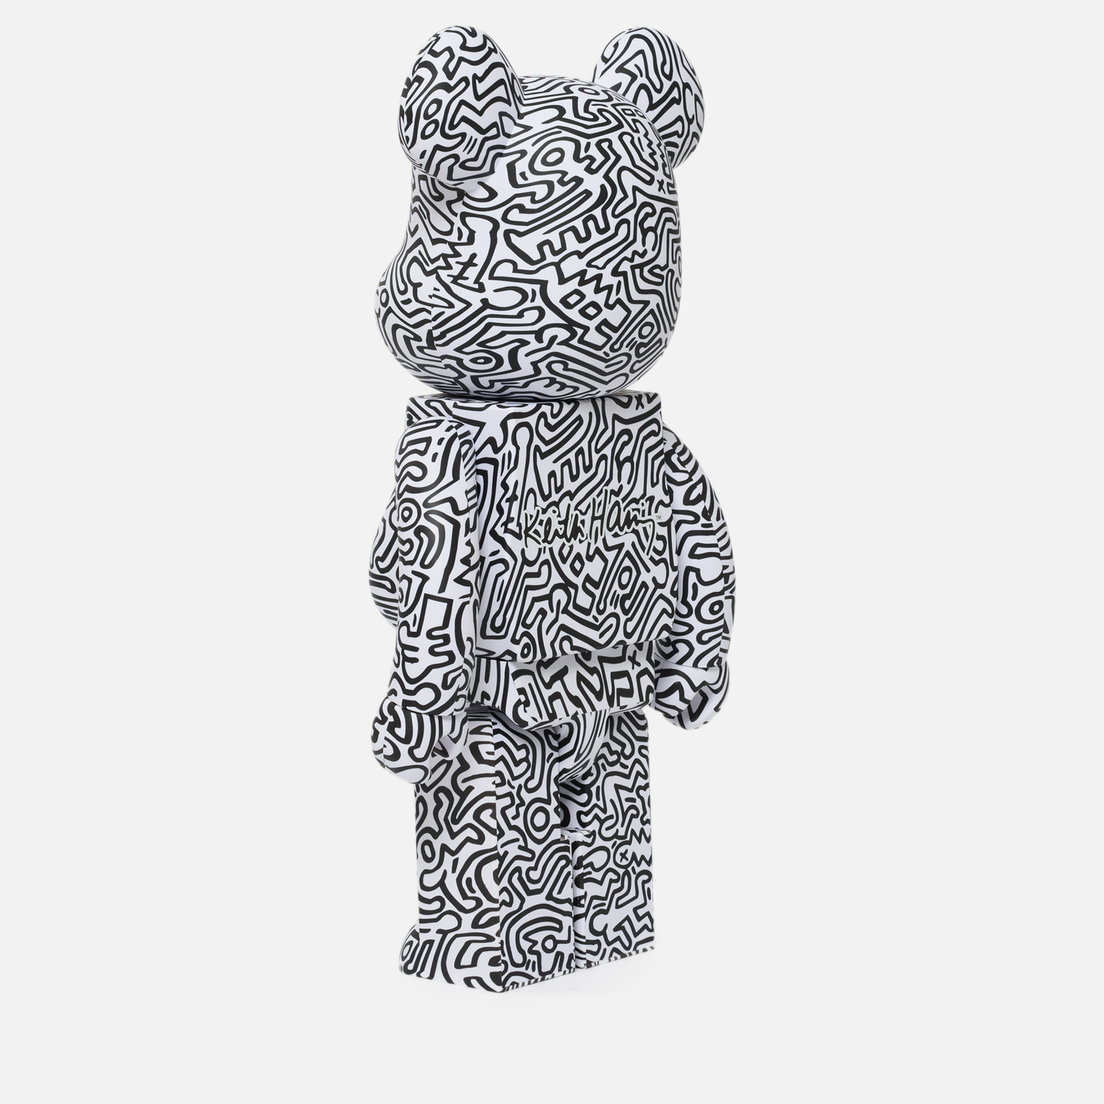 Medicom Toy Игрушка Bearbrick Keith Haring Ver. 4 1000%